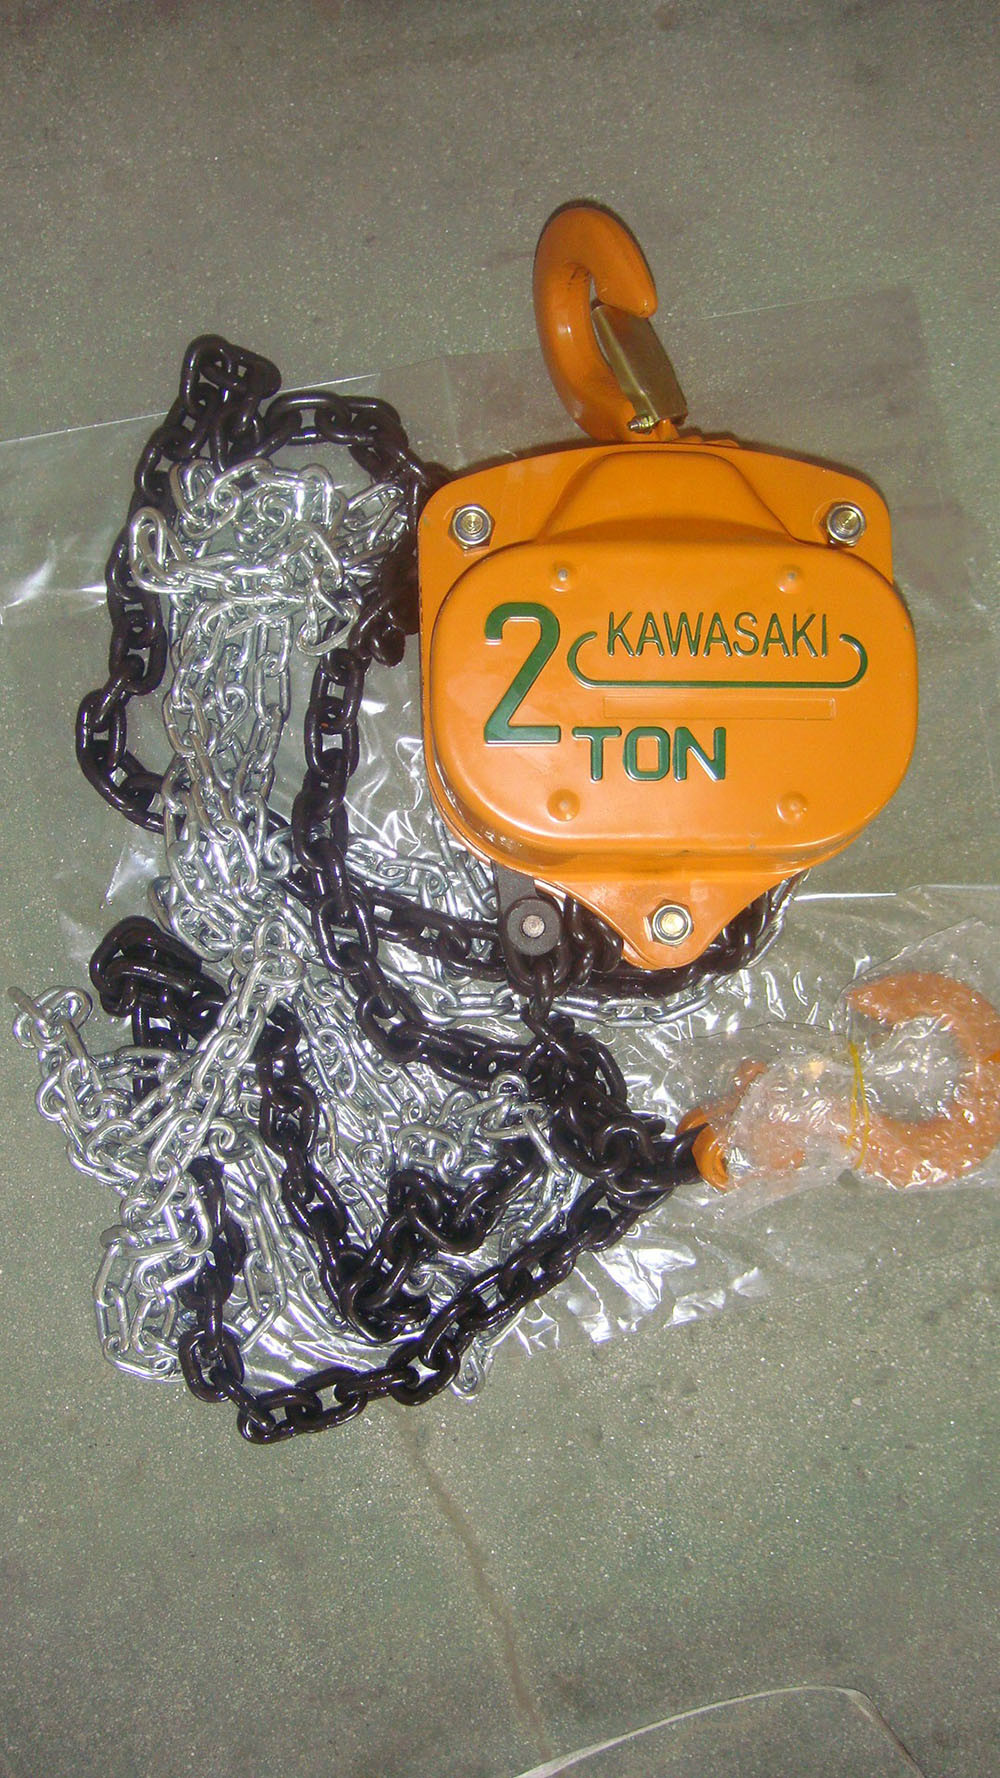 Kawasaki Brand Vital Type 1t to 50t Hand Chain Hoist/Chain Block/Chain Pully